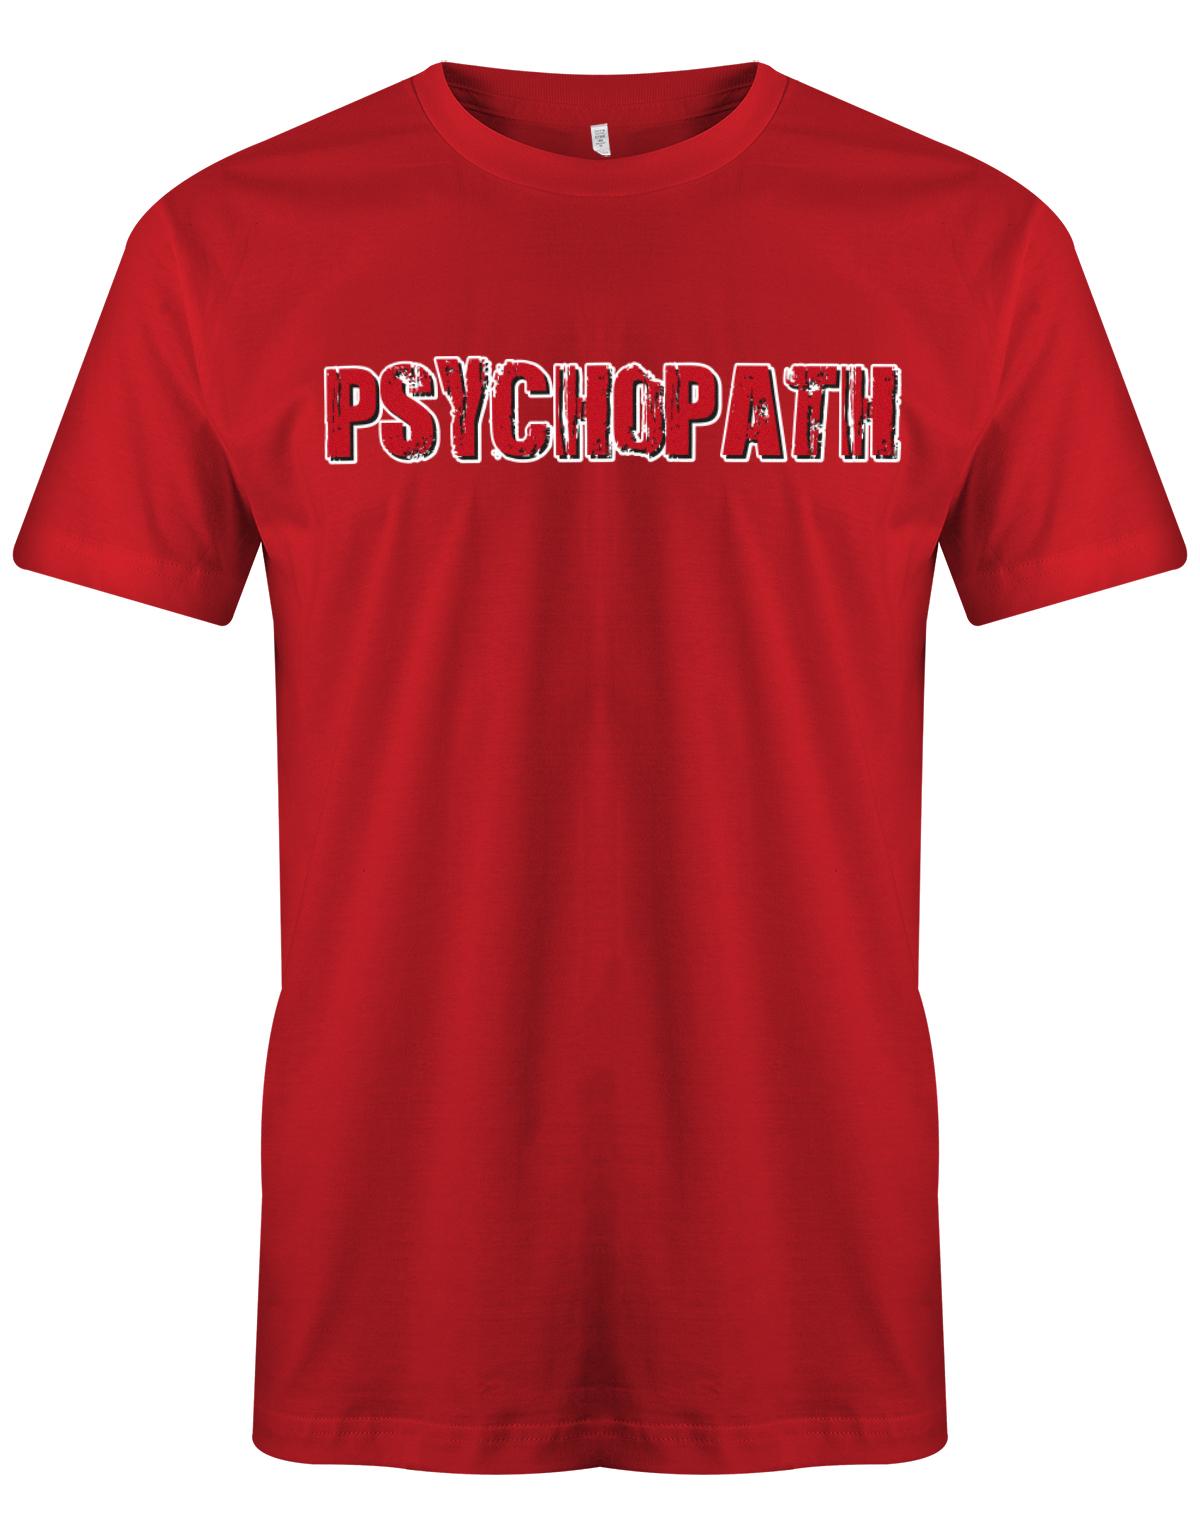 Psychopath-Kost-m-Shirt-Herren-Rot